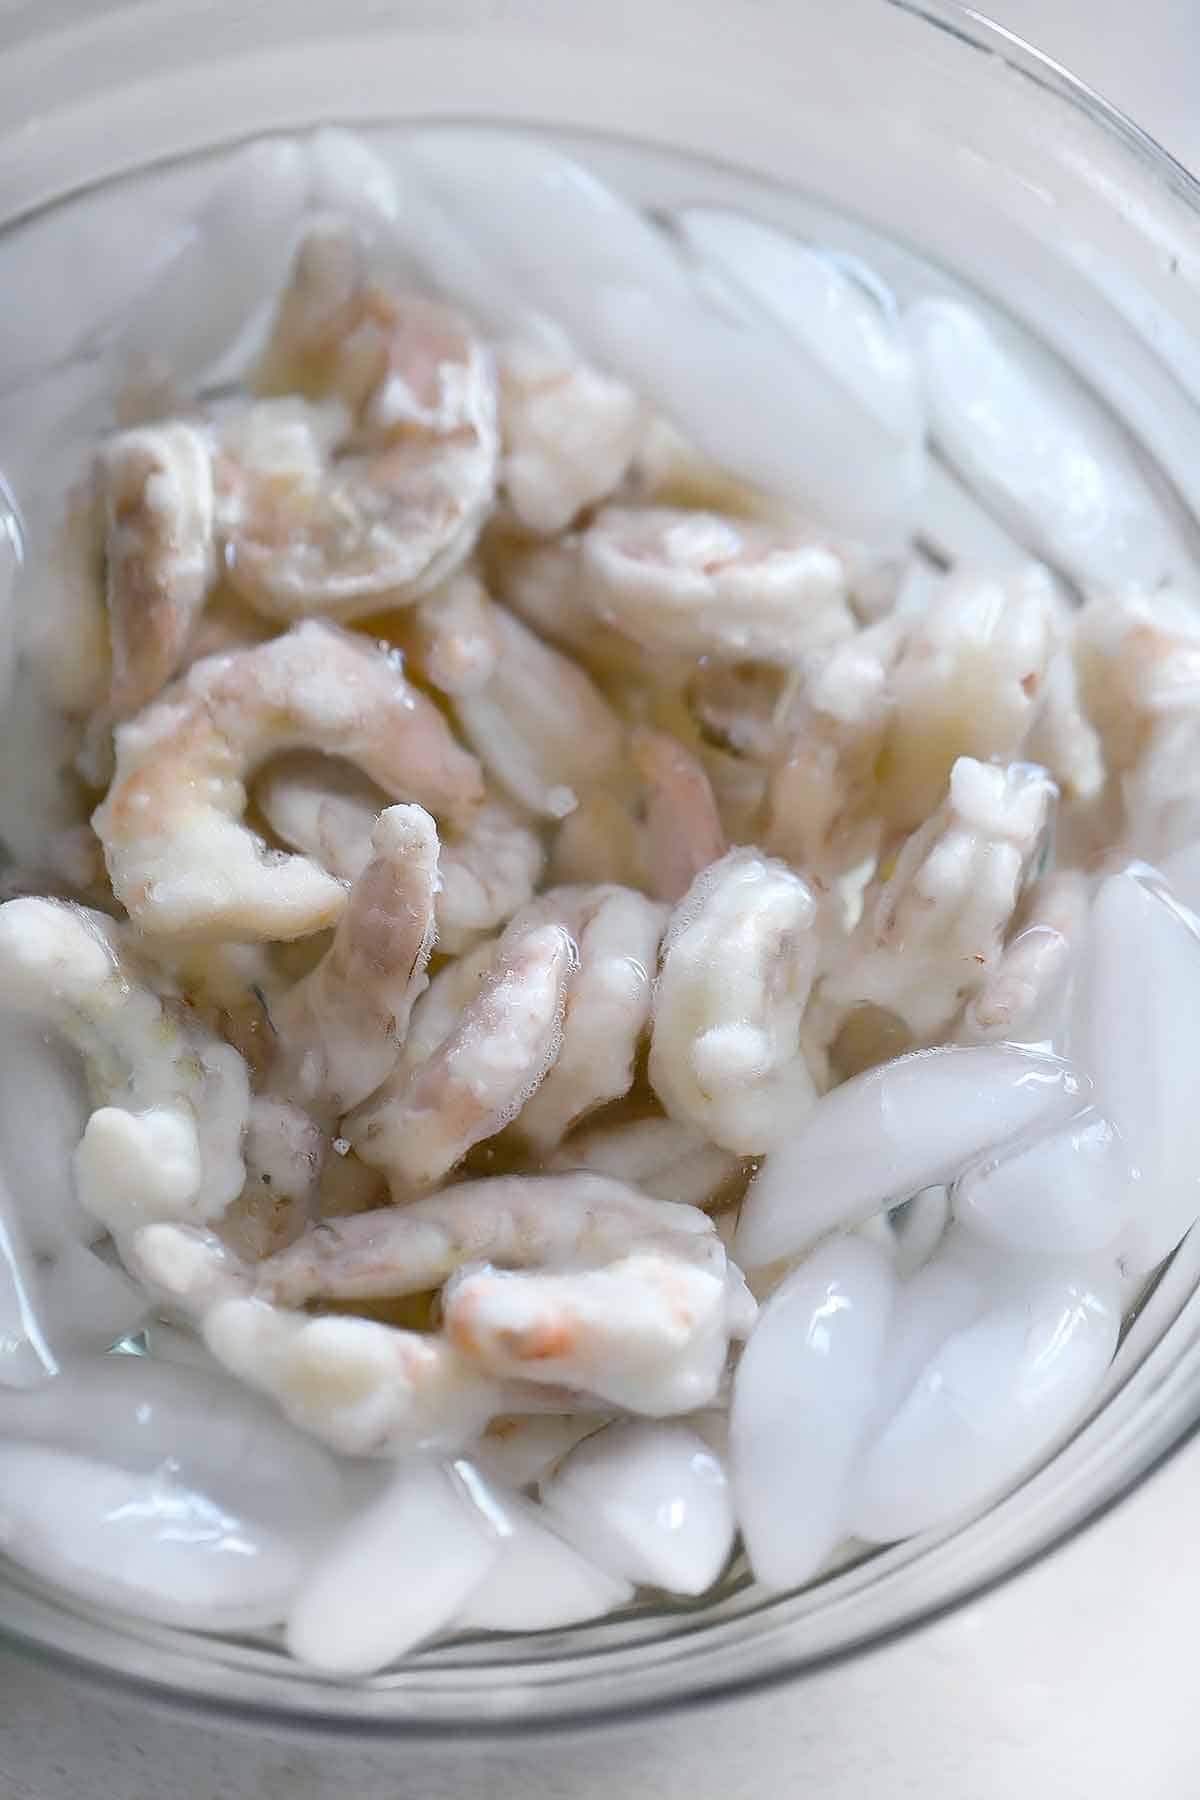 How to defrost frozen shrimp in ice water.